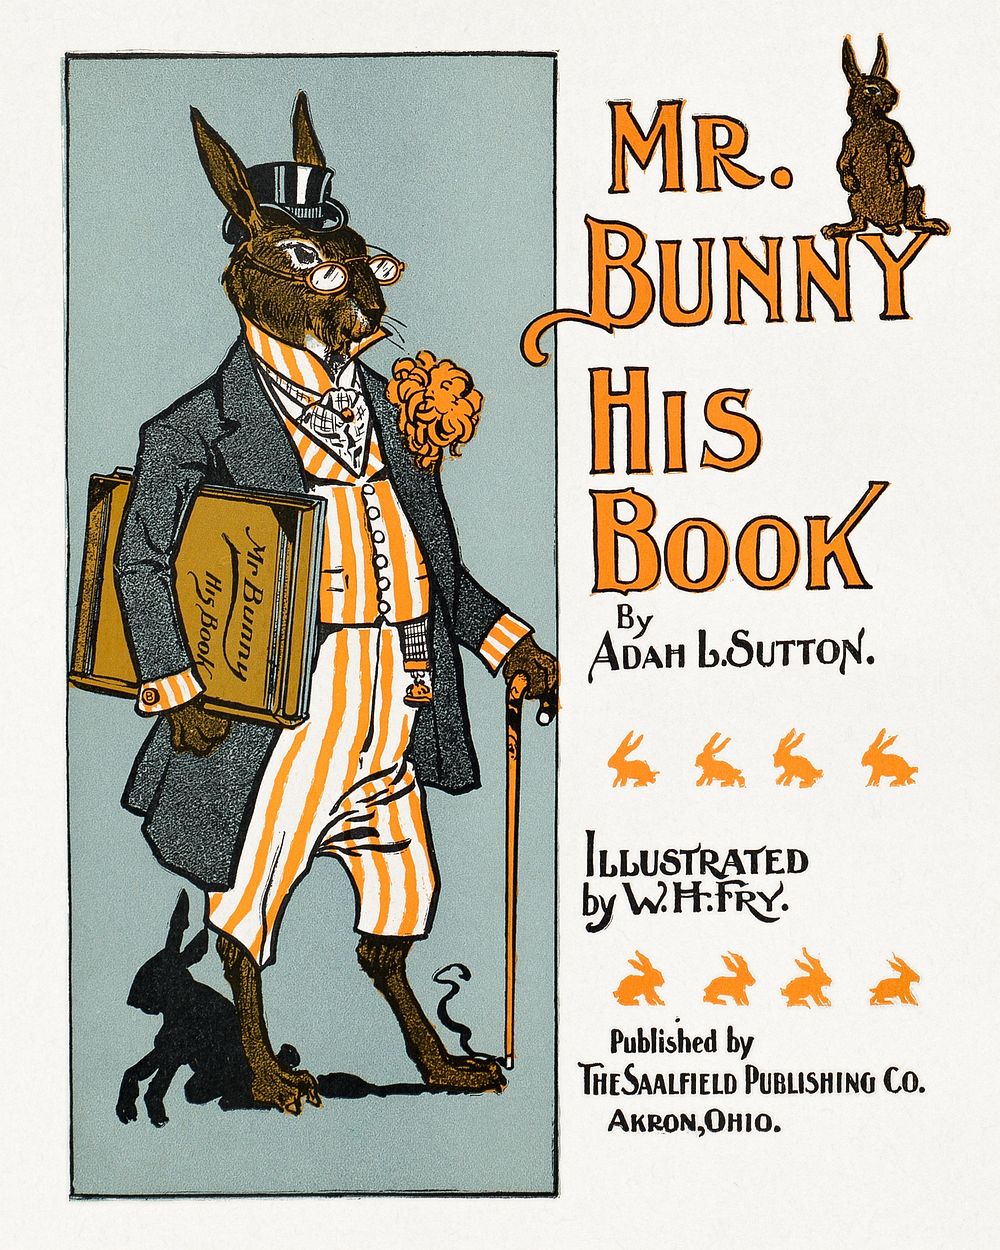 Mr. Bunny, his book by Adam L. Sutton (1890&ndash;1920), vintage book cover illustration by W. H. Fry. Original public…